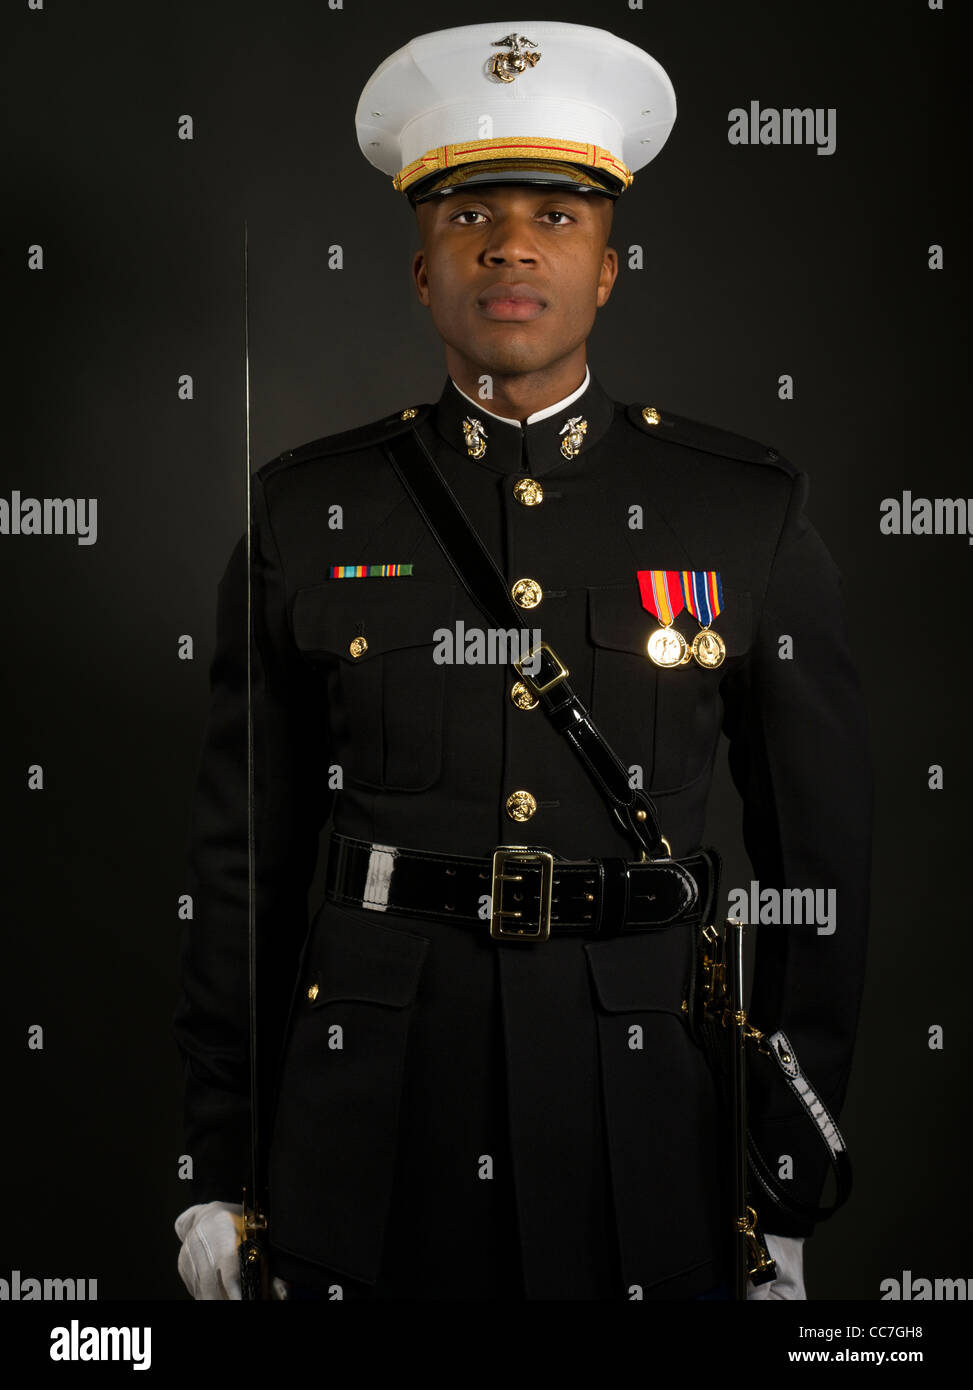 Marine Corps Officer Uniform 8